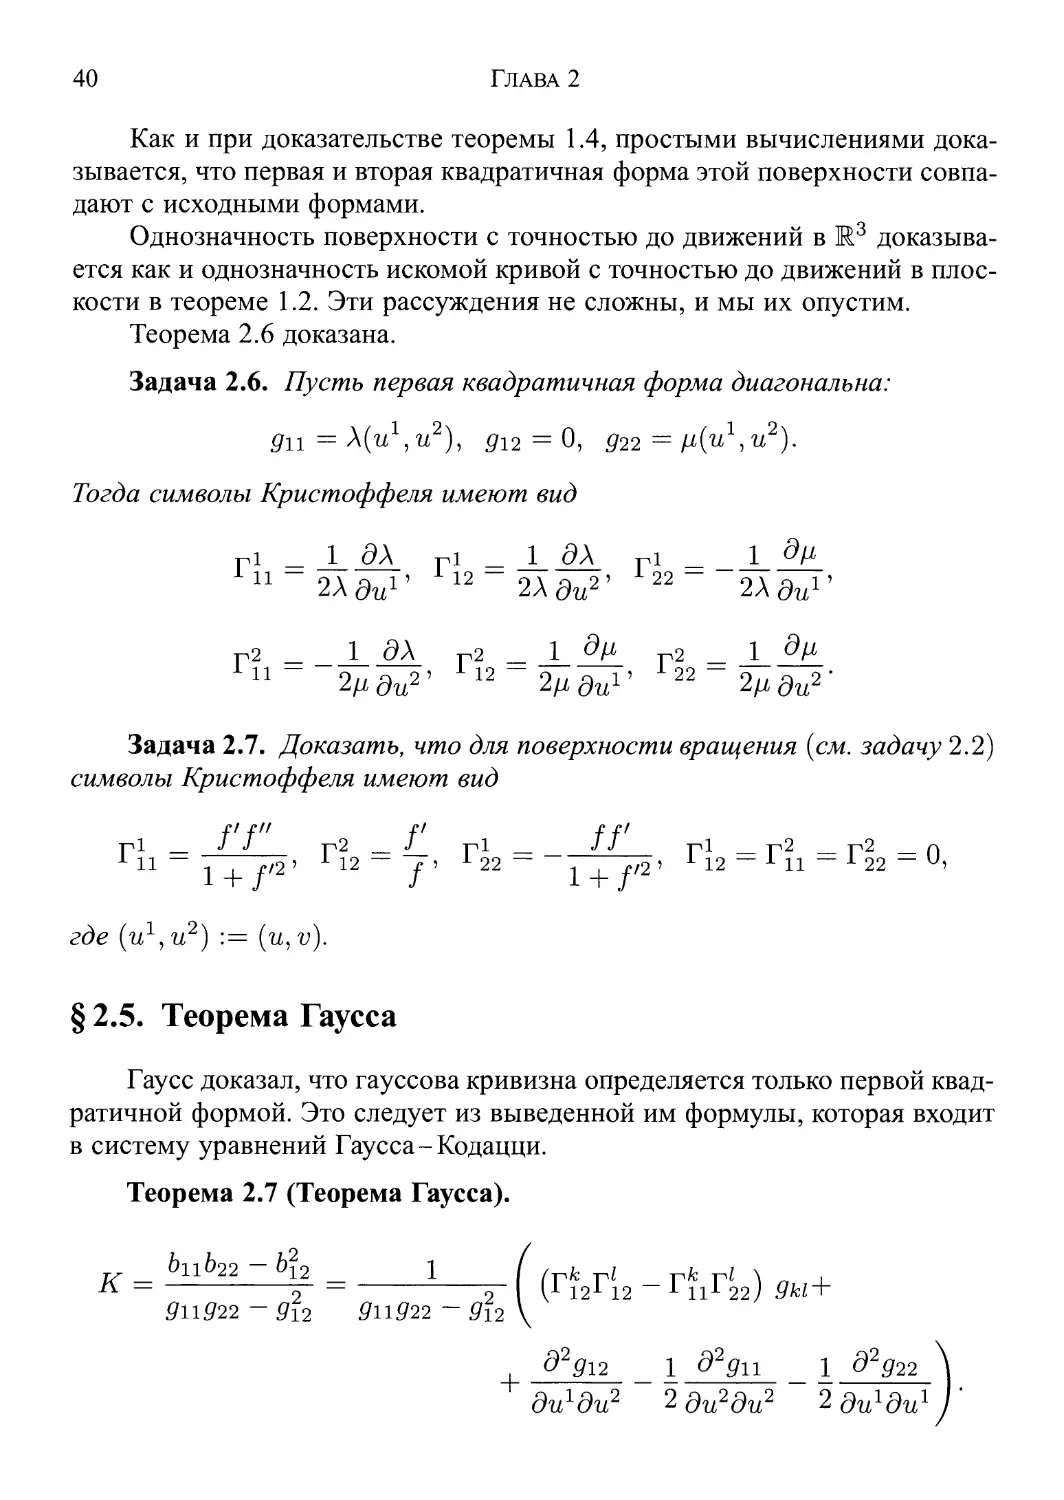 § 2.5. Теорема Гаусса